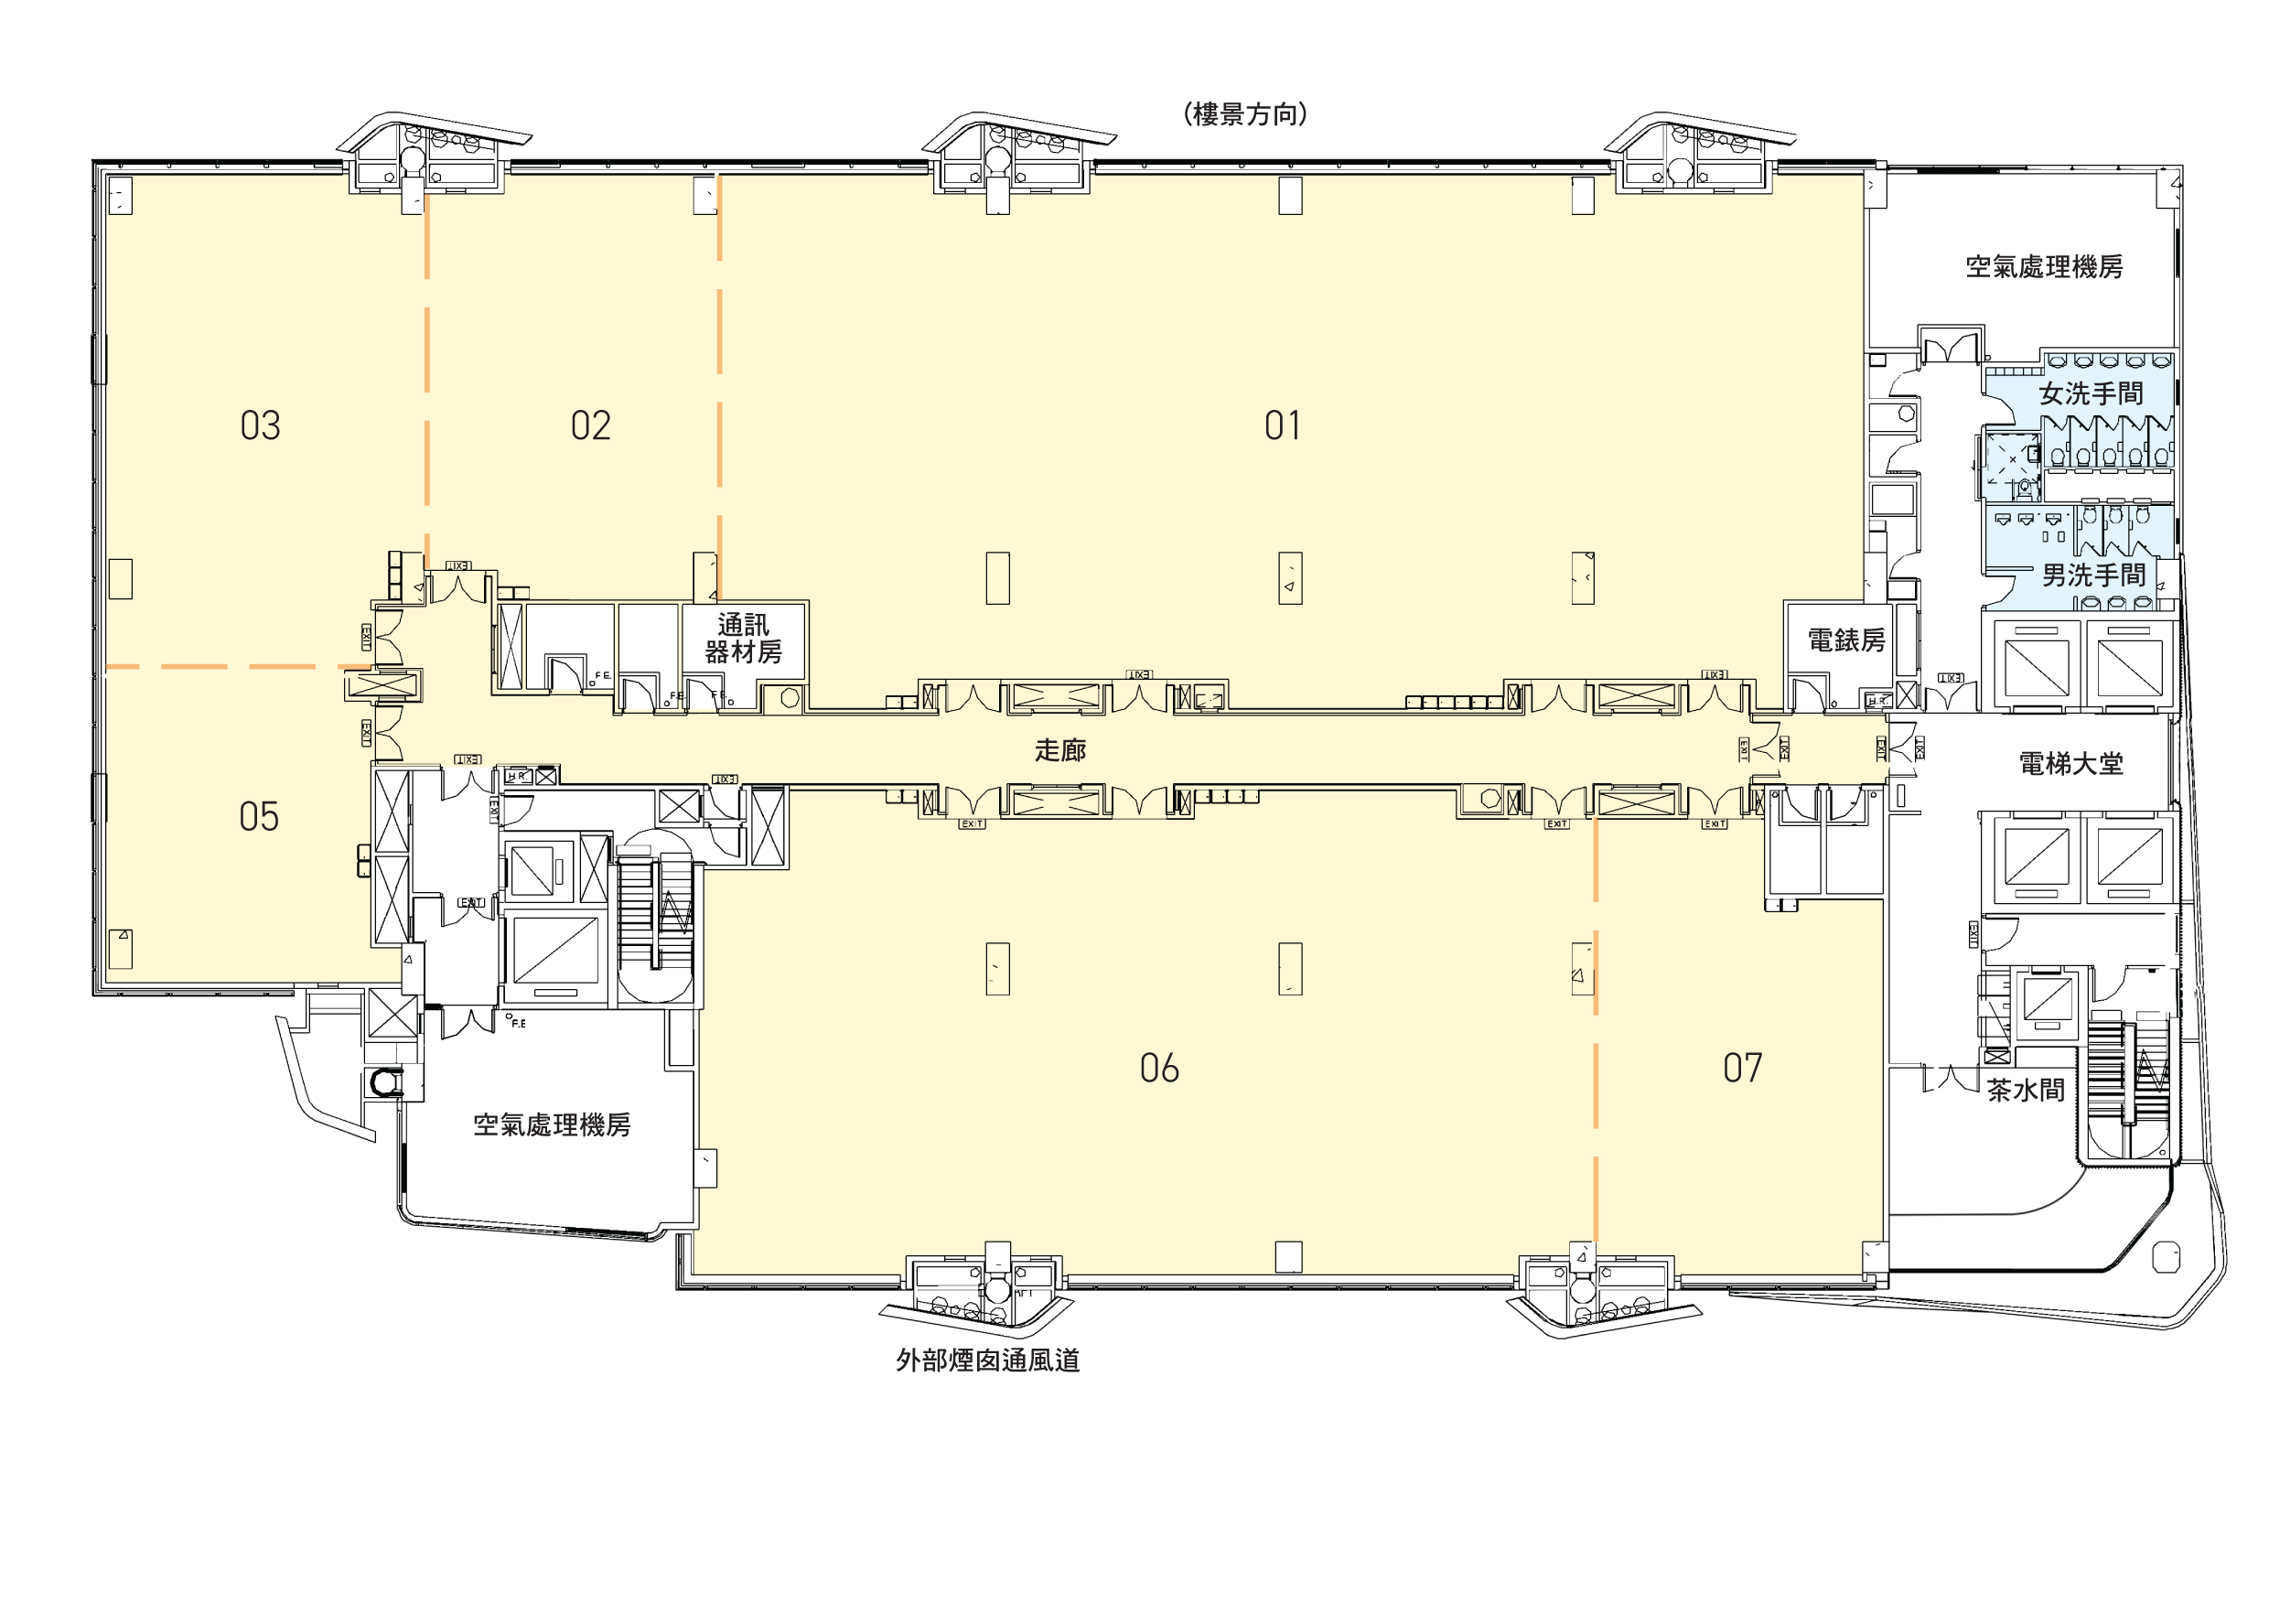 HSIPT Floorplan LB03 8 Chi